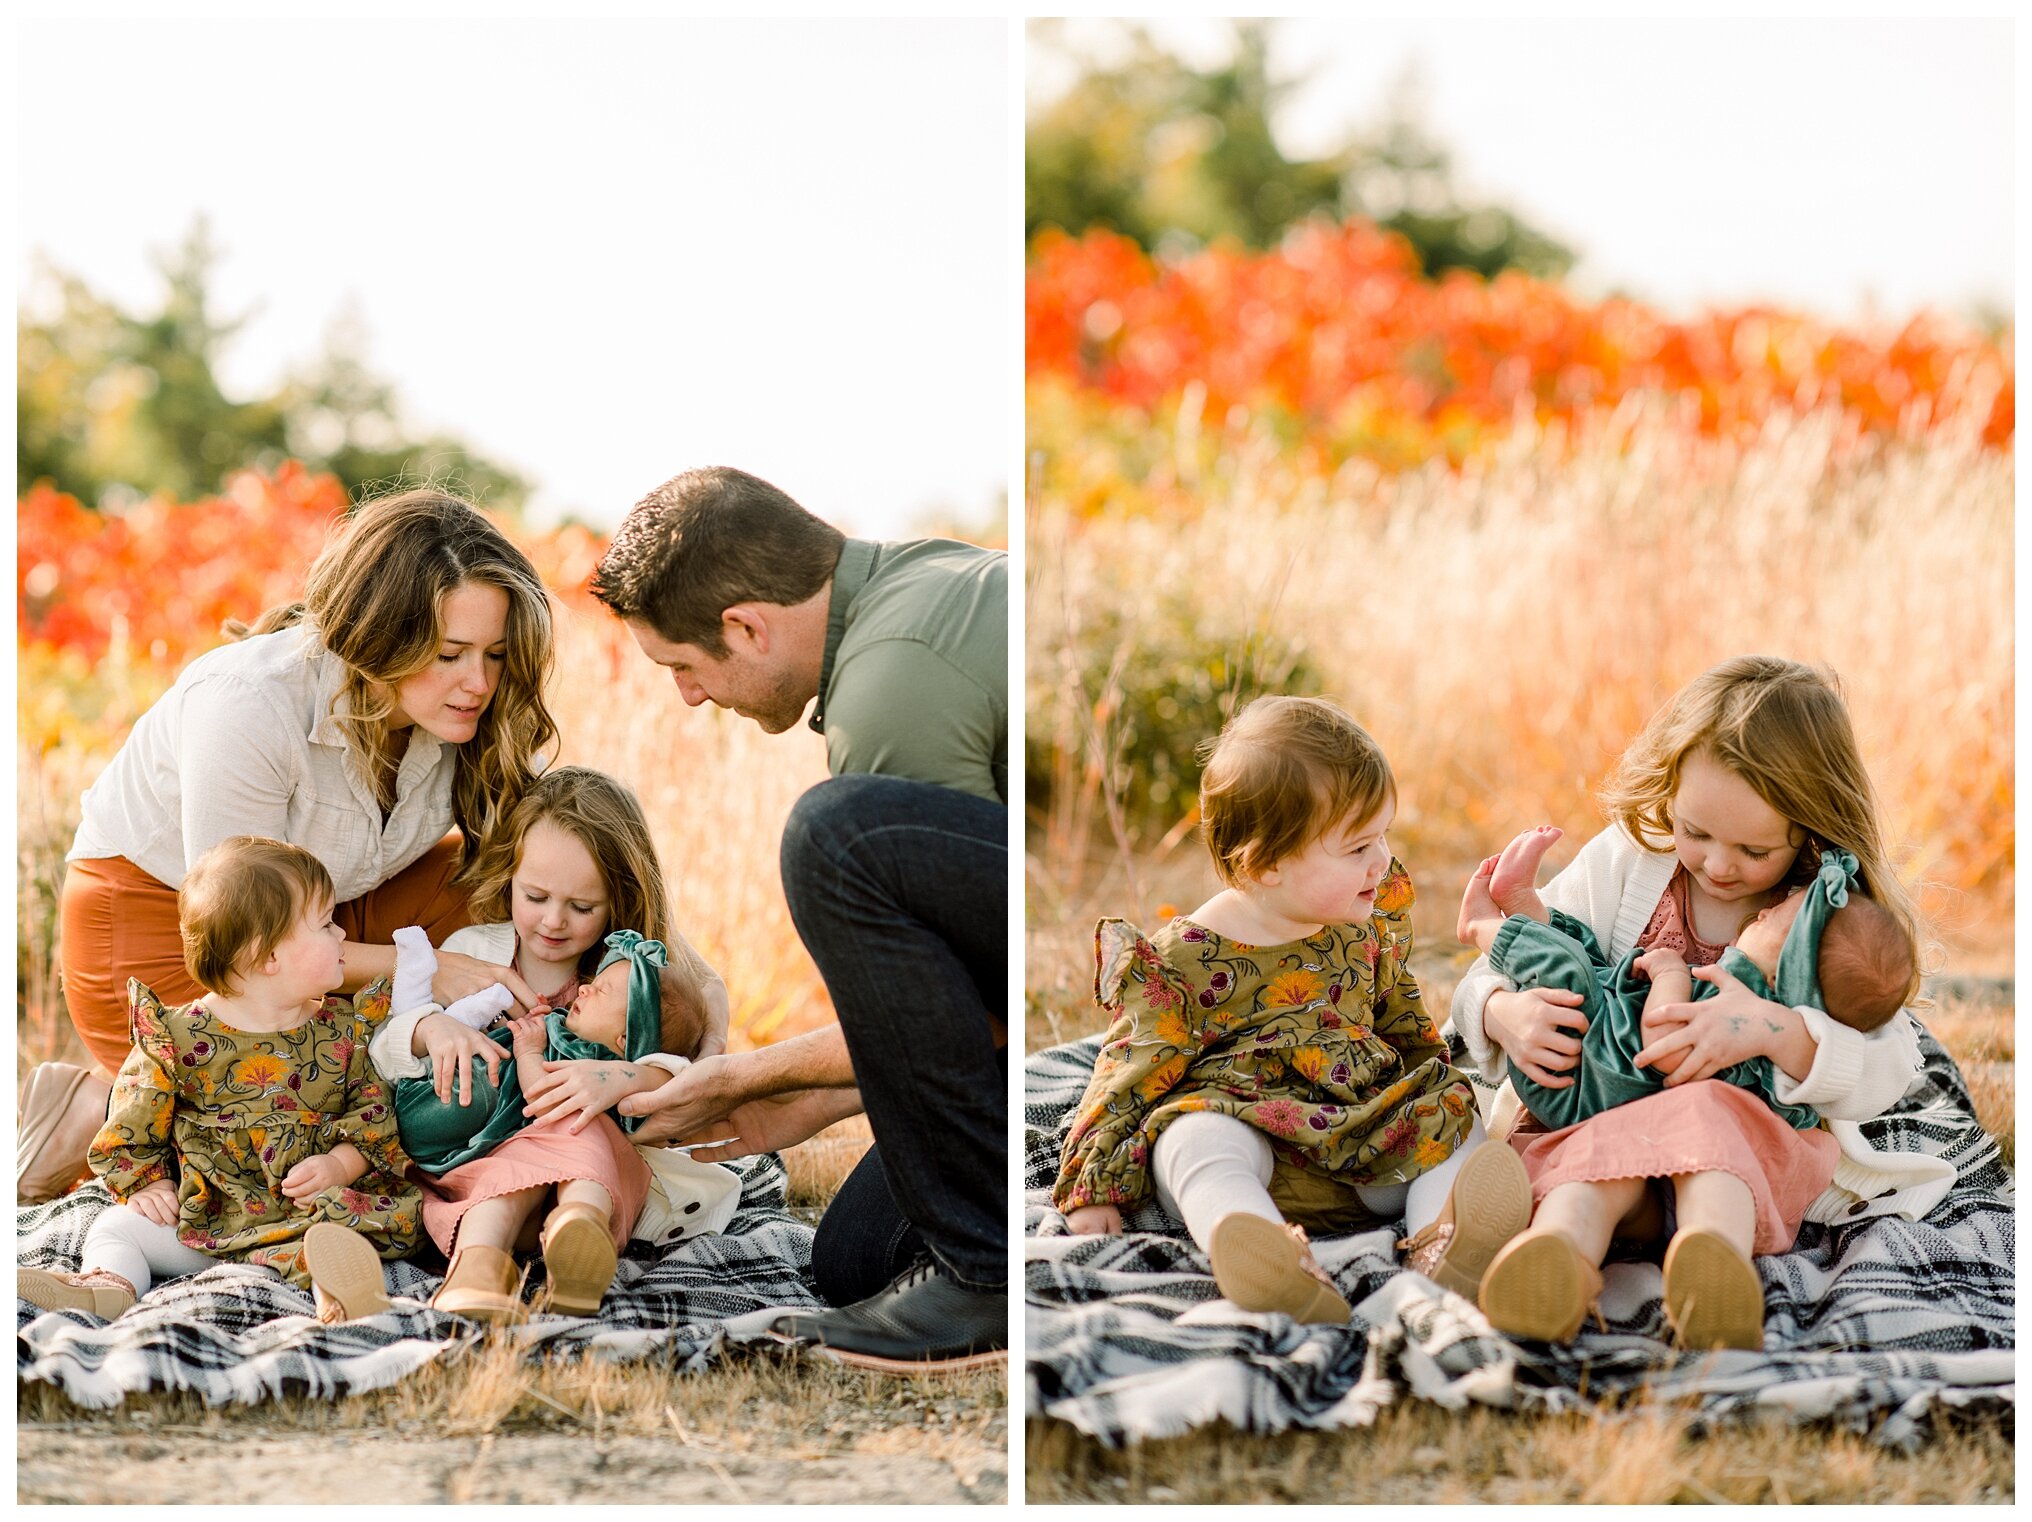 Fall-family-photographer-sweet-light-portraits011.jpg